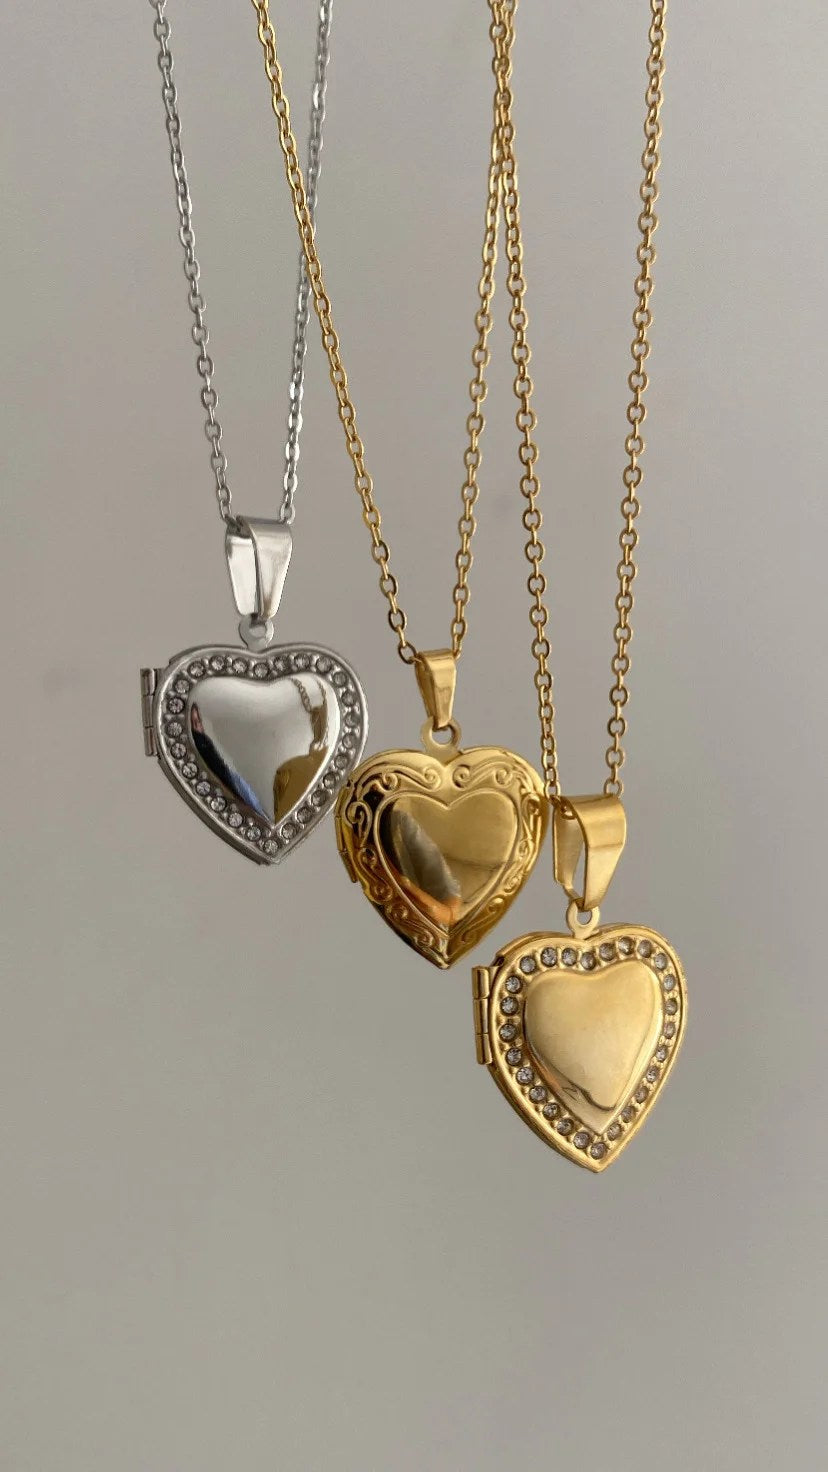 Vintage 2.0 open locket heart necklace